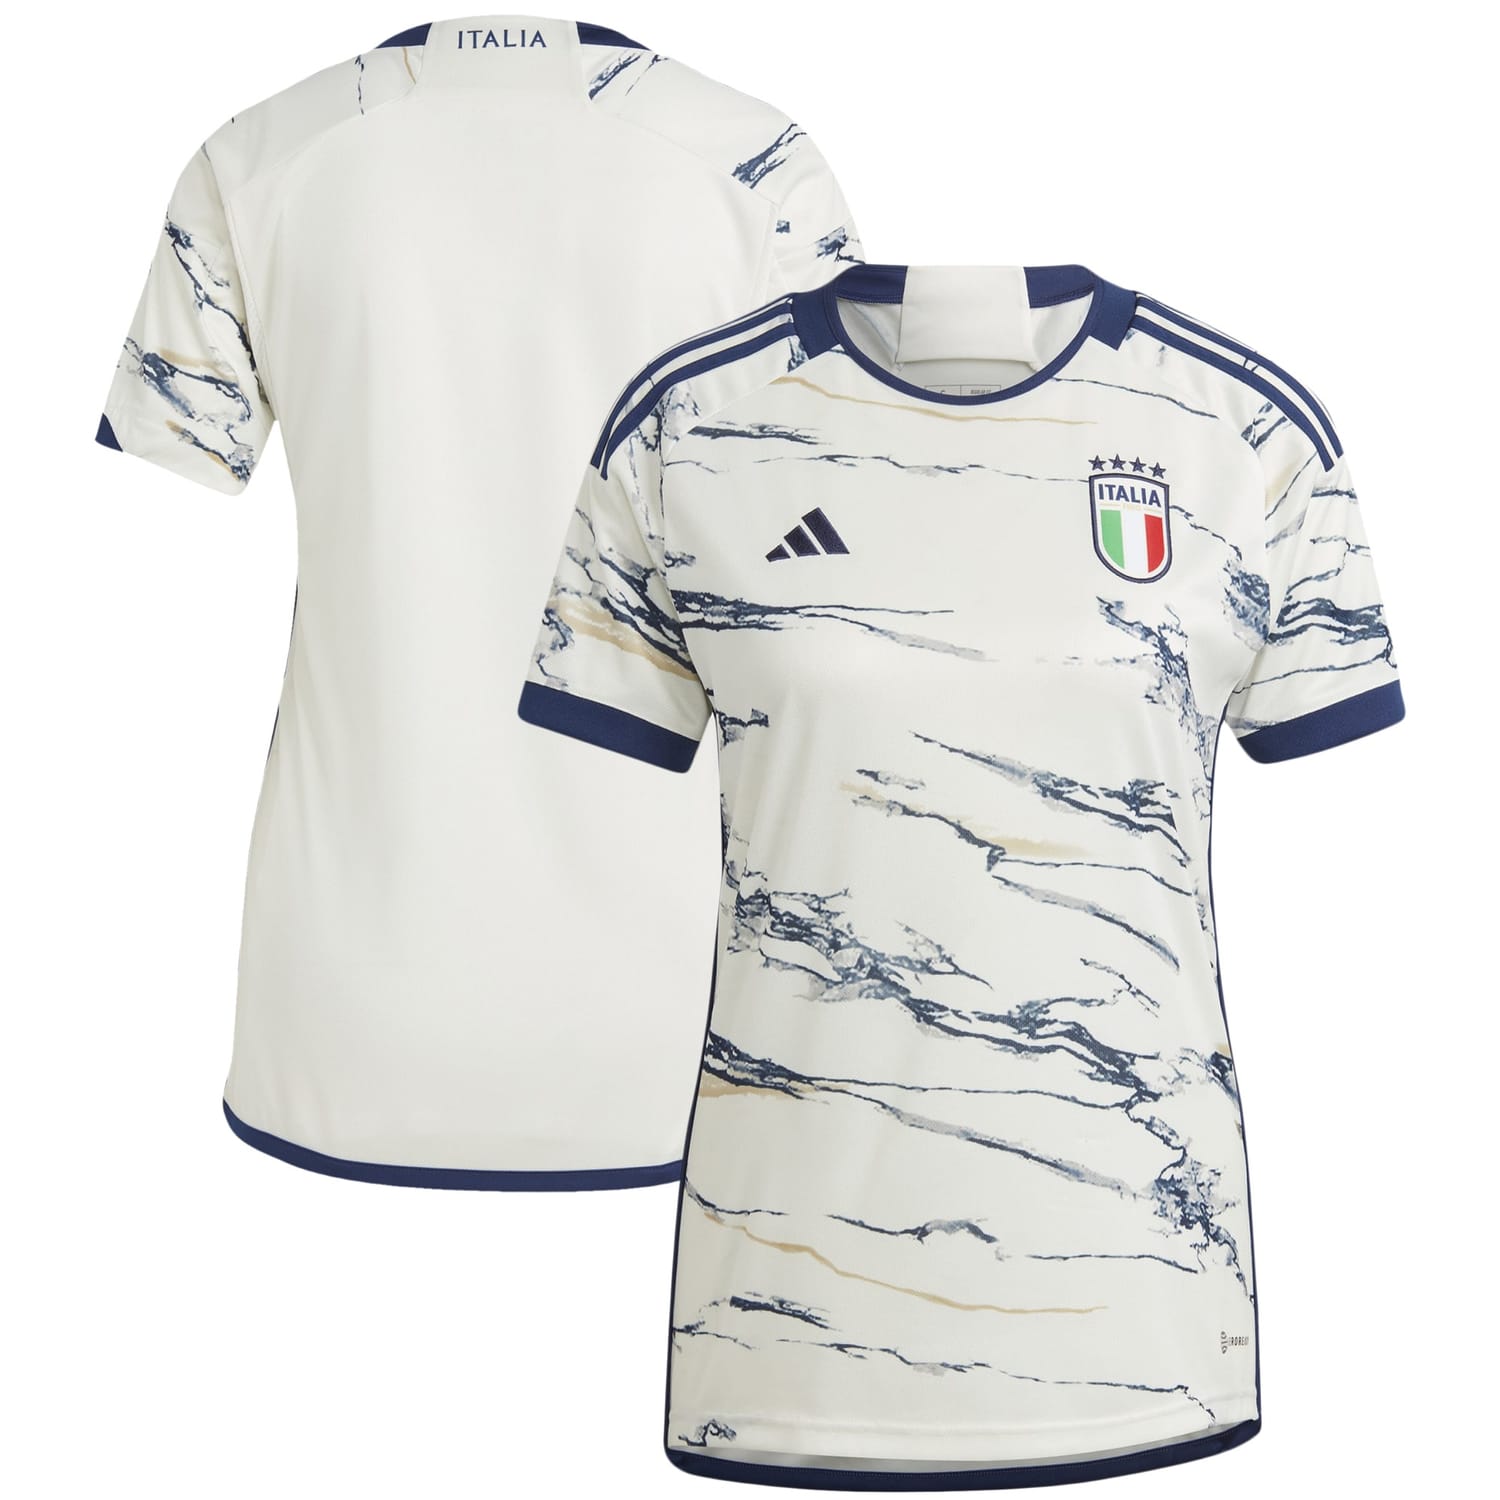 Italy National Team Away Jersey Shirt for Women